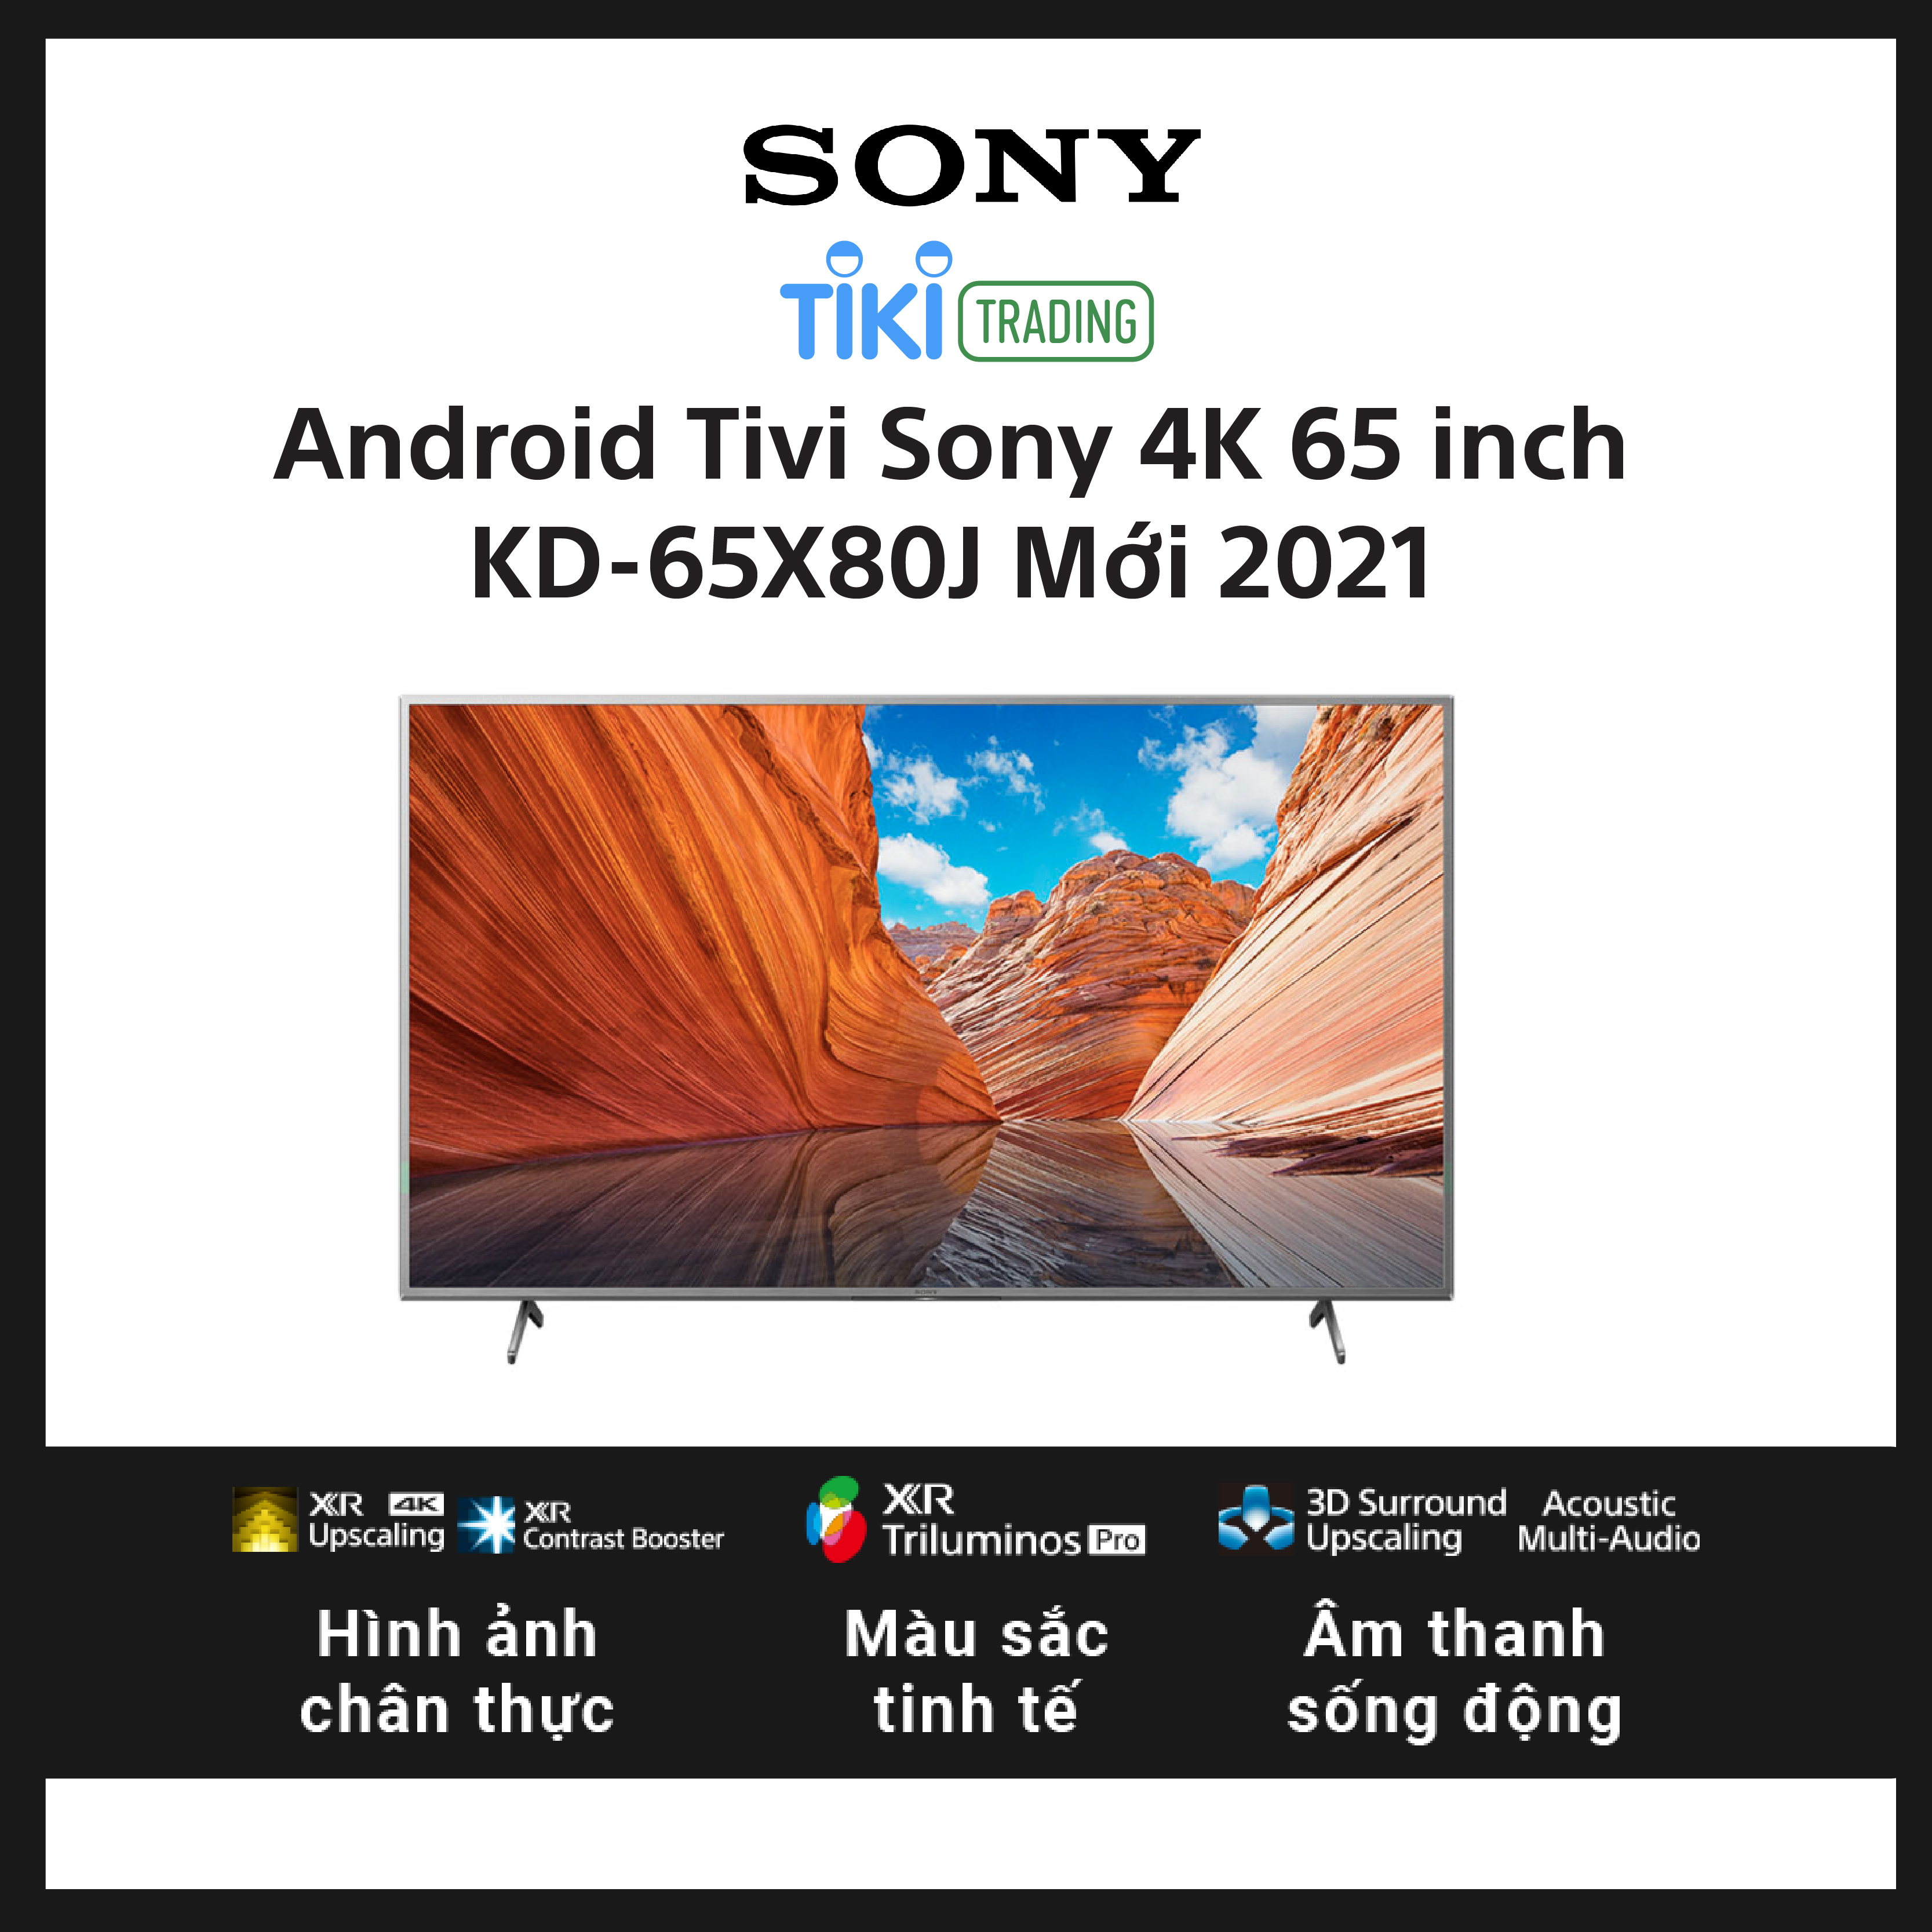 Android Tivi Sony 4K 65 inch KD-65X80J